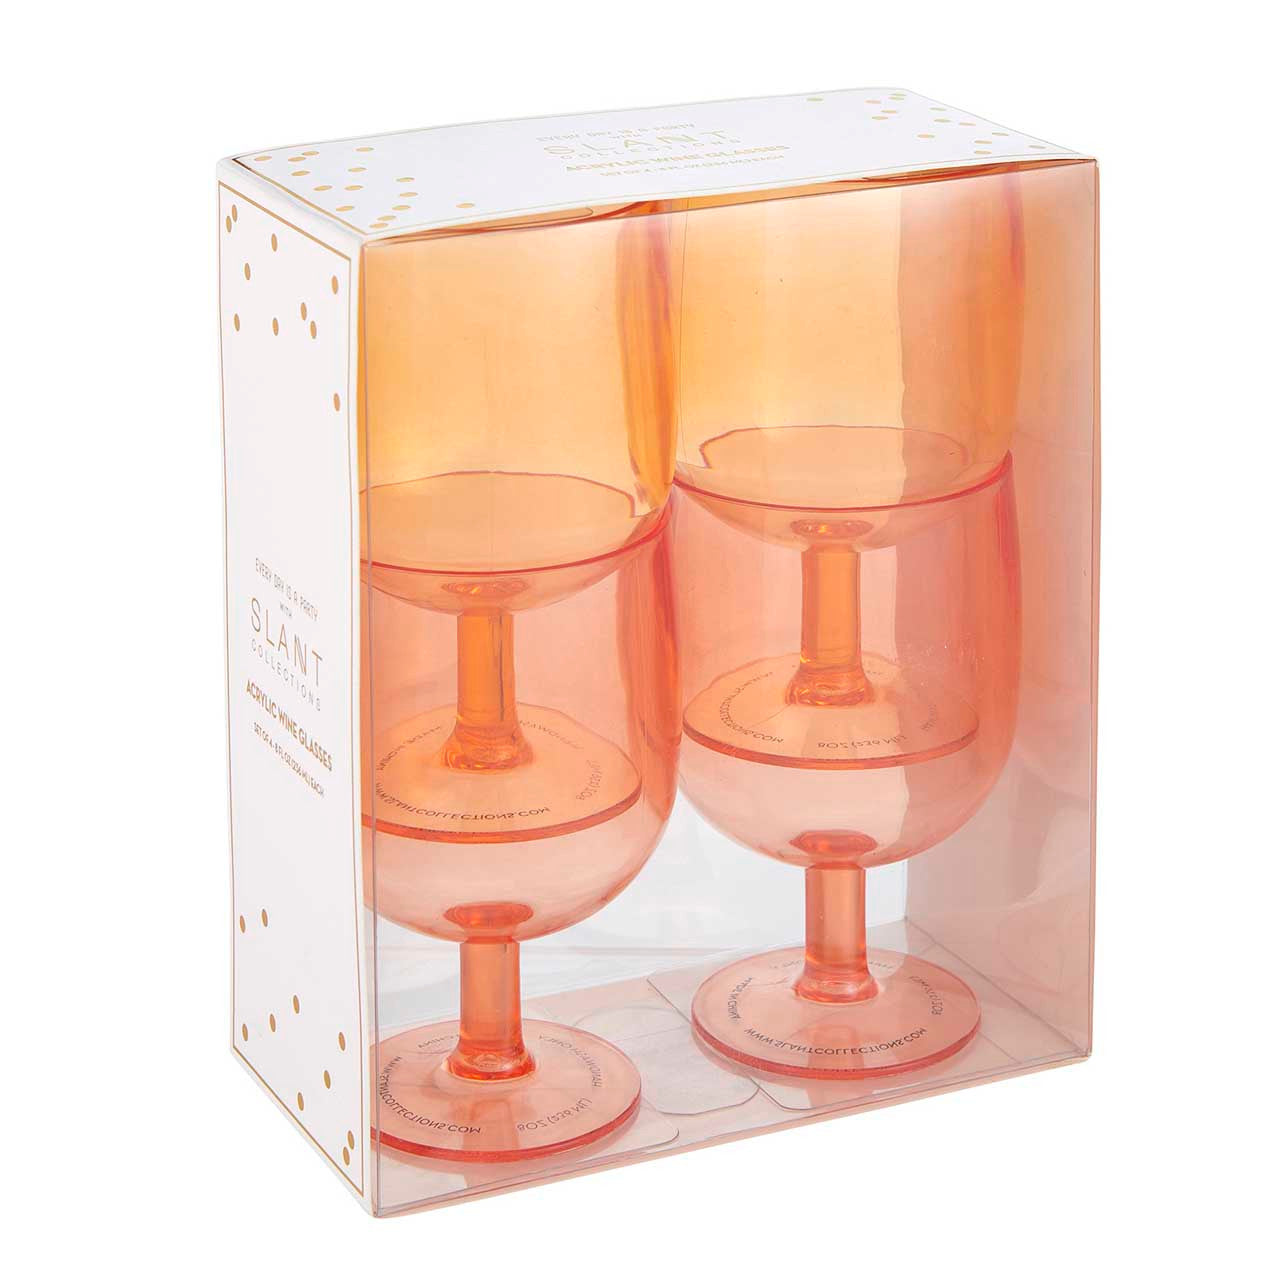 Stackable Acrylic Stemmed Wine Glasses in Pink / Orange